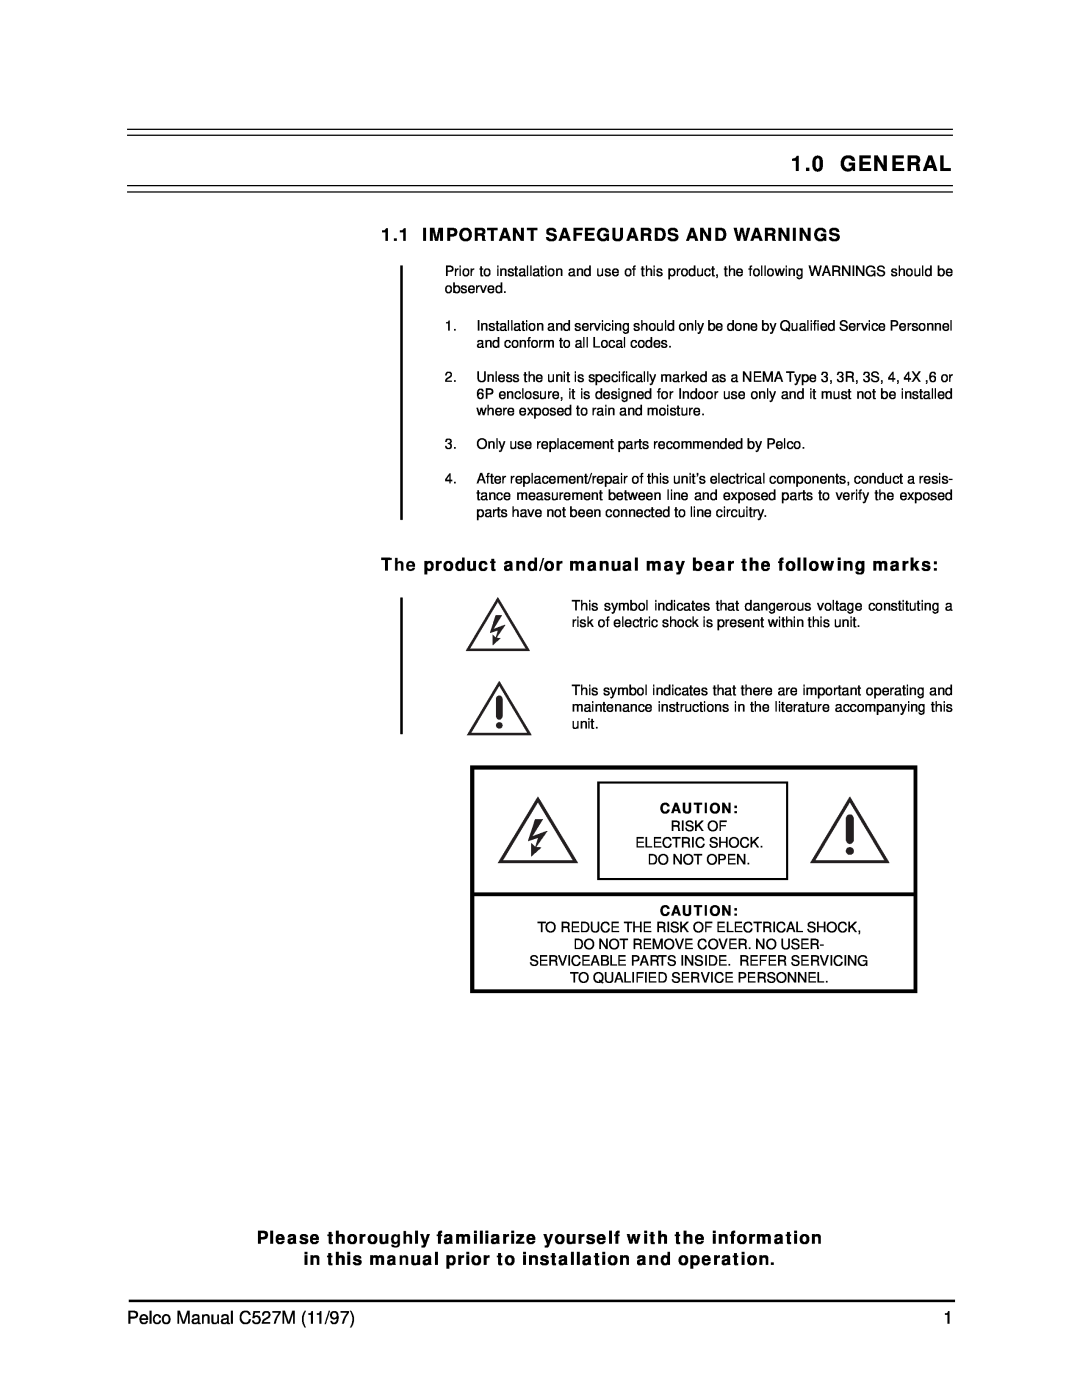 Pelco Kbd300 operation manual General, Important Safeguards And Warnings, Pelco Manual C527M 11/97 